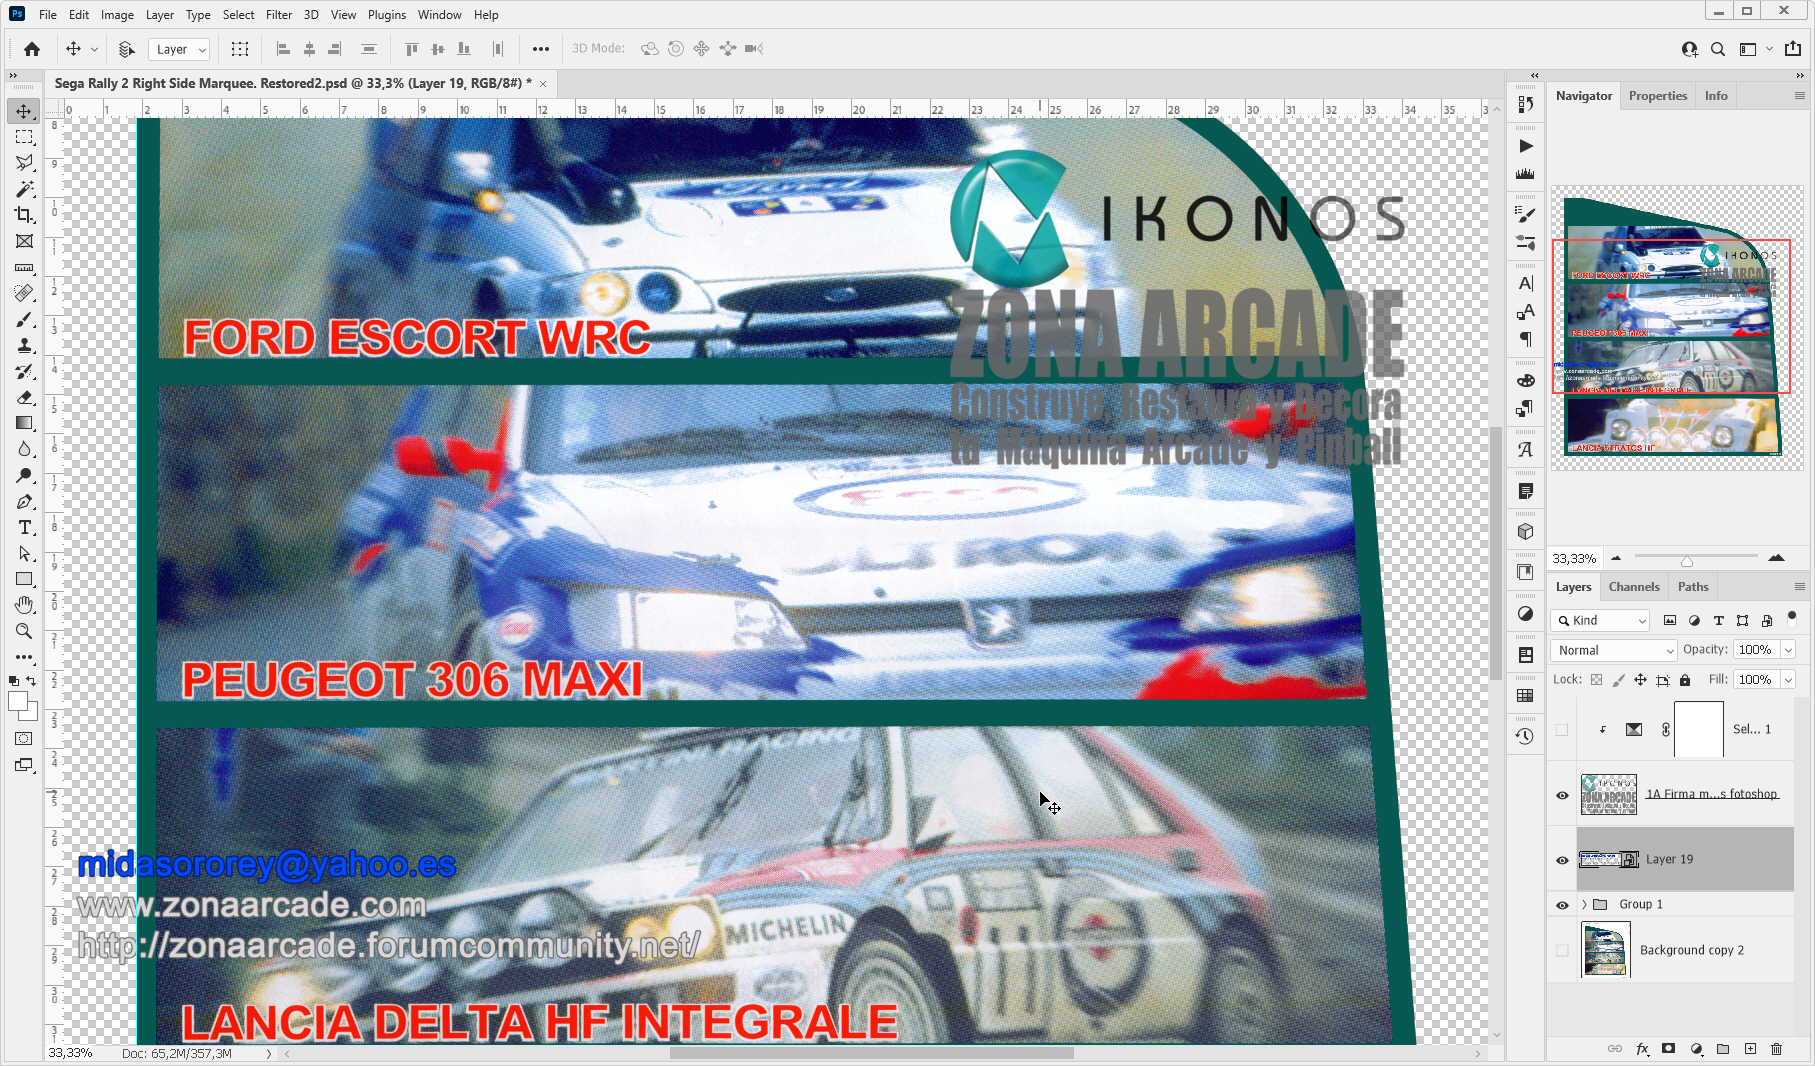 Sega-Rally-2-Right-Marquee-SRT-0201-D-Restored-Mikonos2